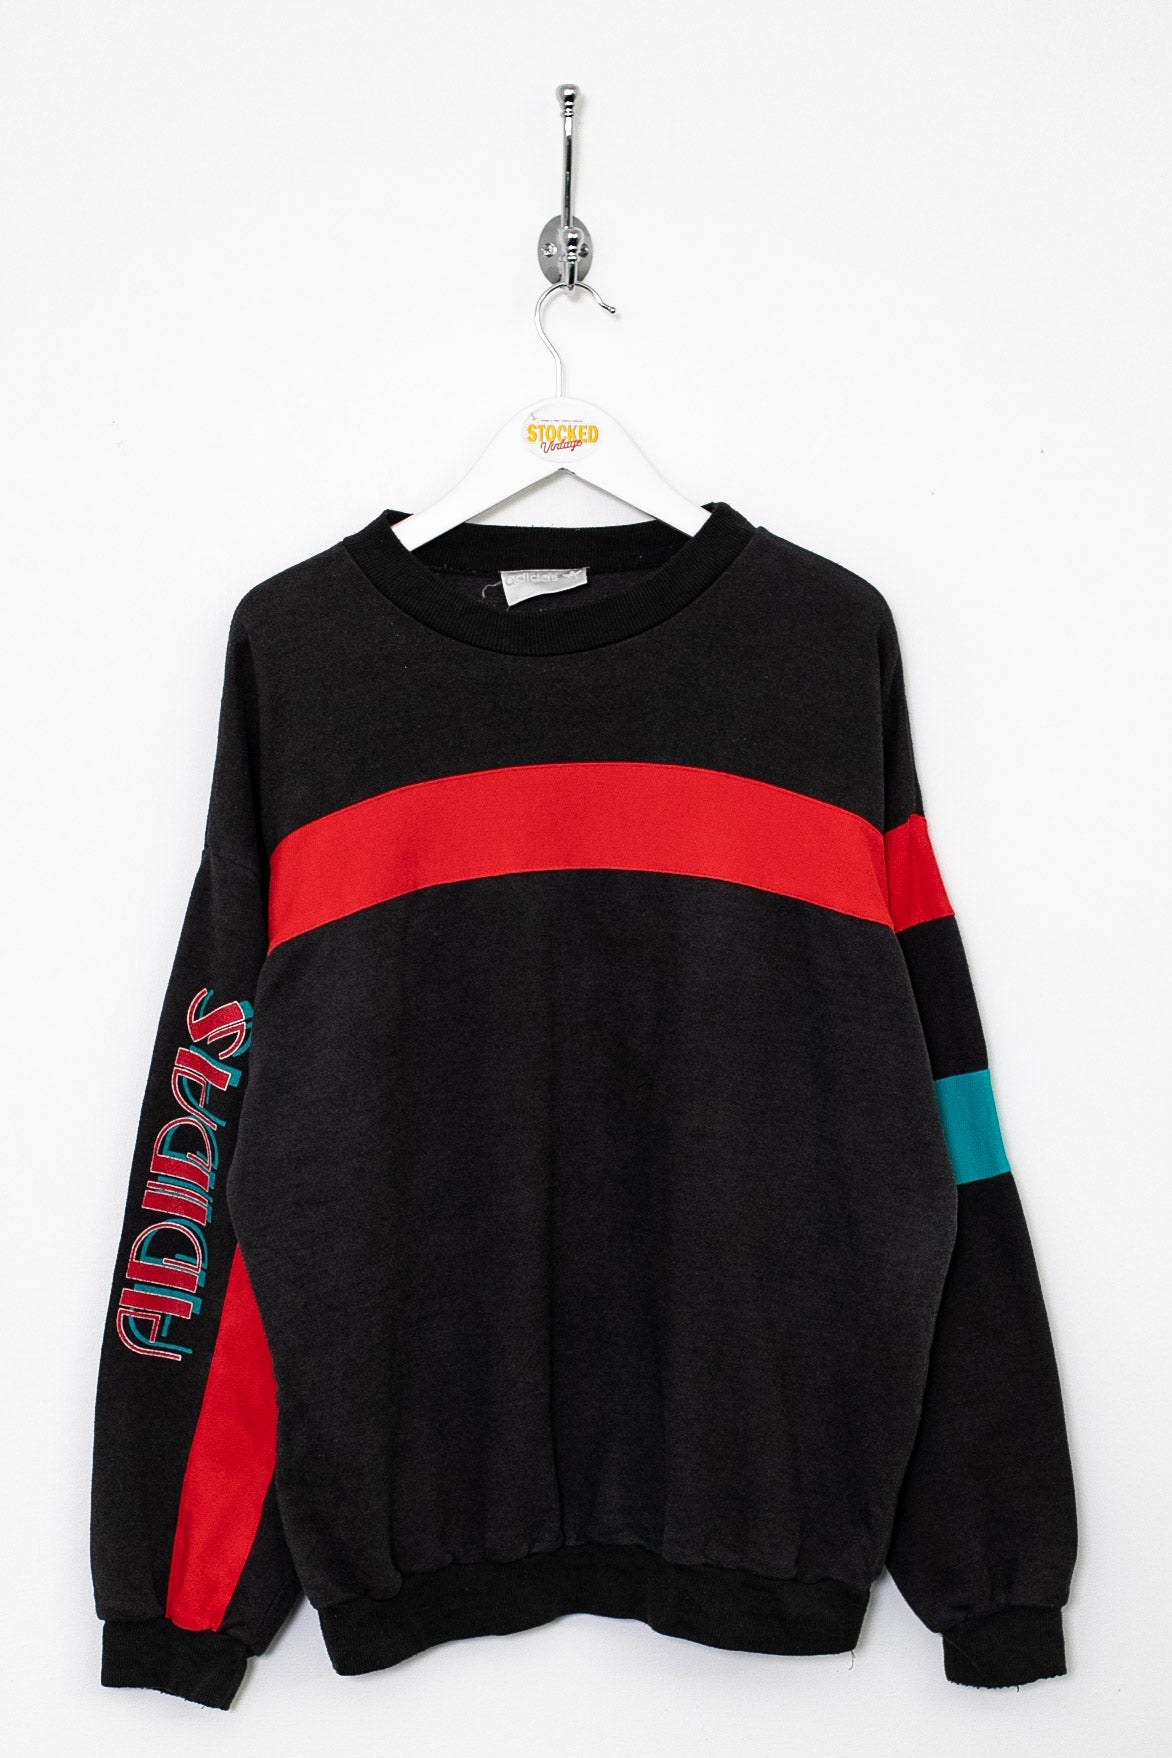 90s Adidas Sweatshirt (M)